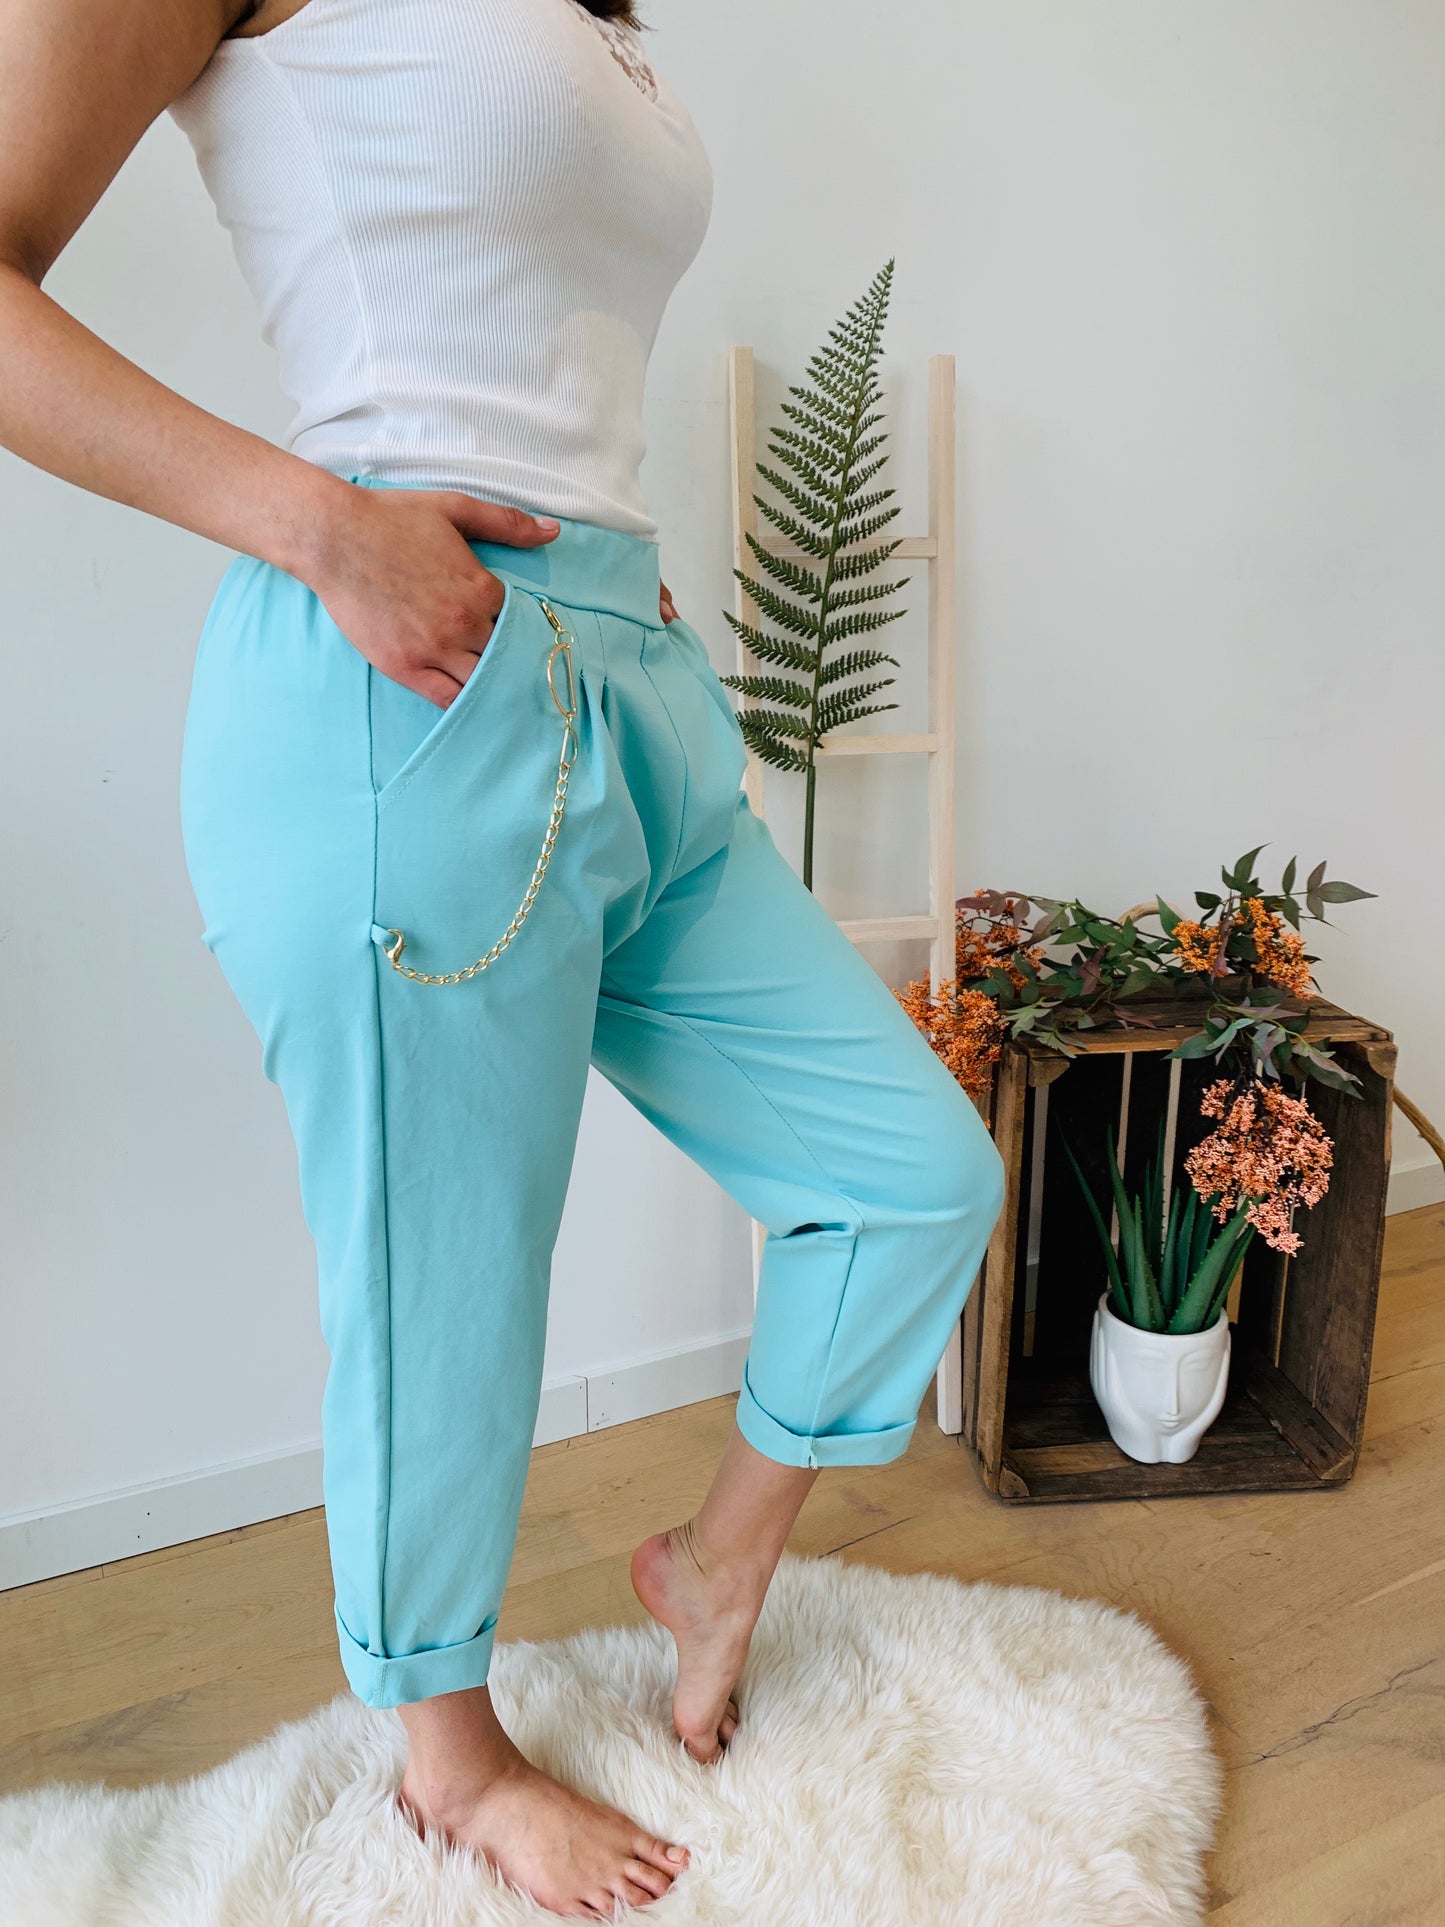 Pantalon Garance turquoise